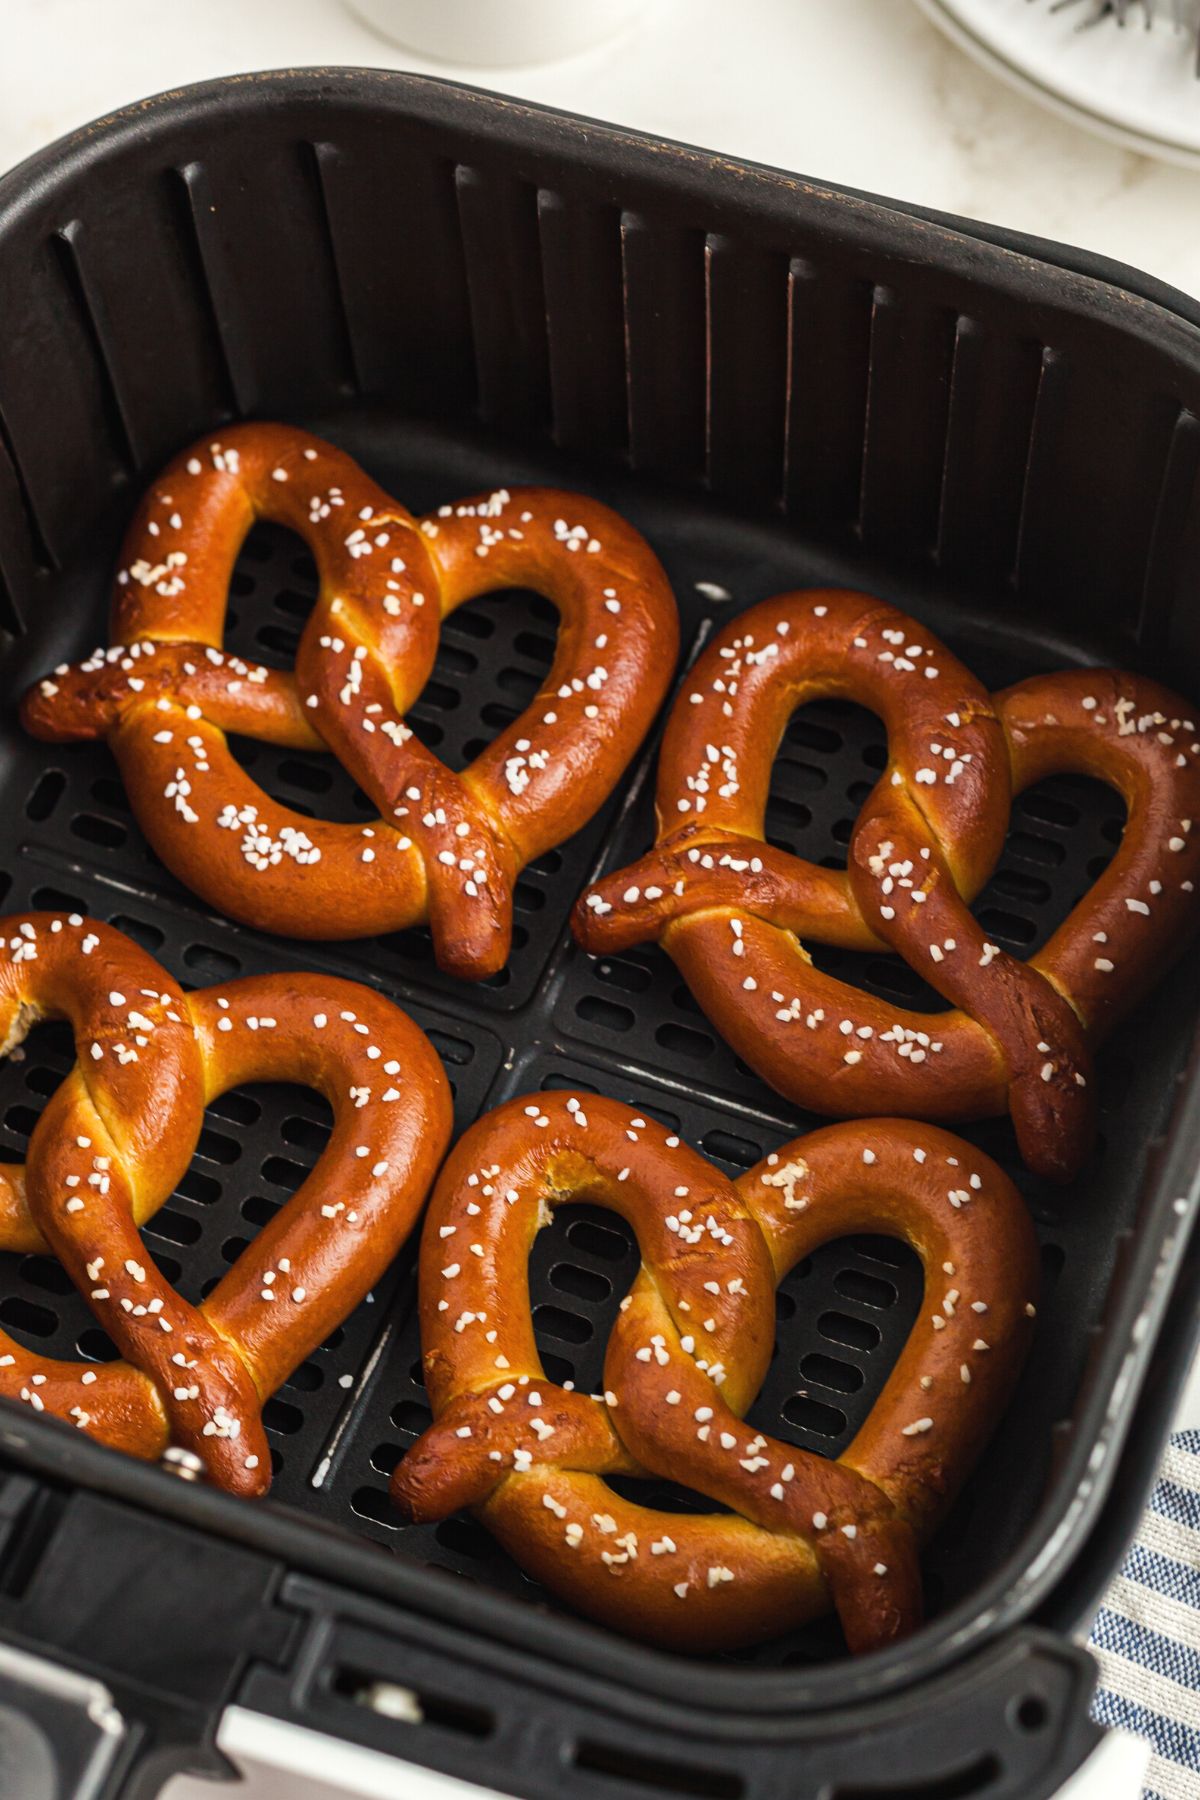 Golden salted pretzels in the air fryer basket after being heated